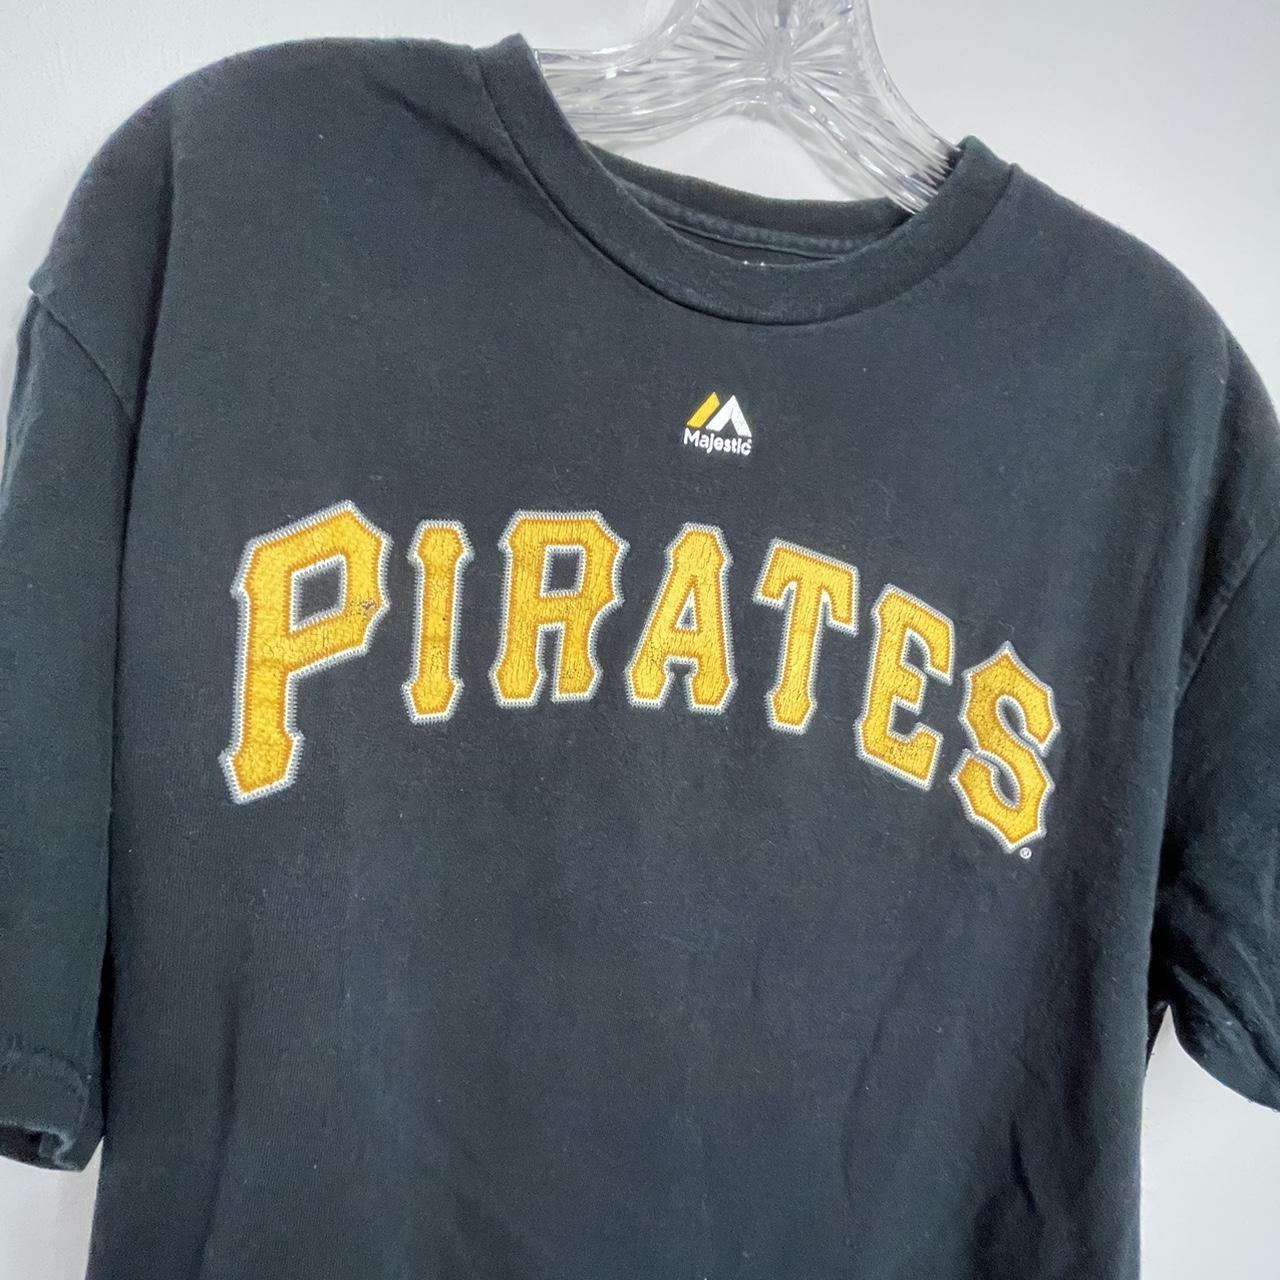 Pittsburgh Pirates MLB Andrew Mccutchen Jersey Shirt - Depop